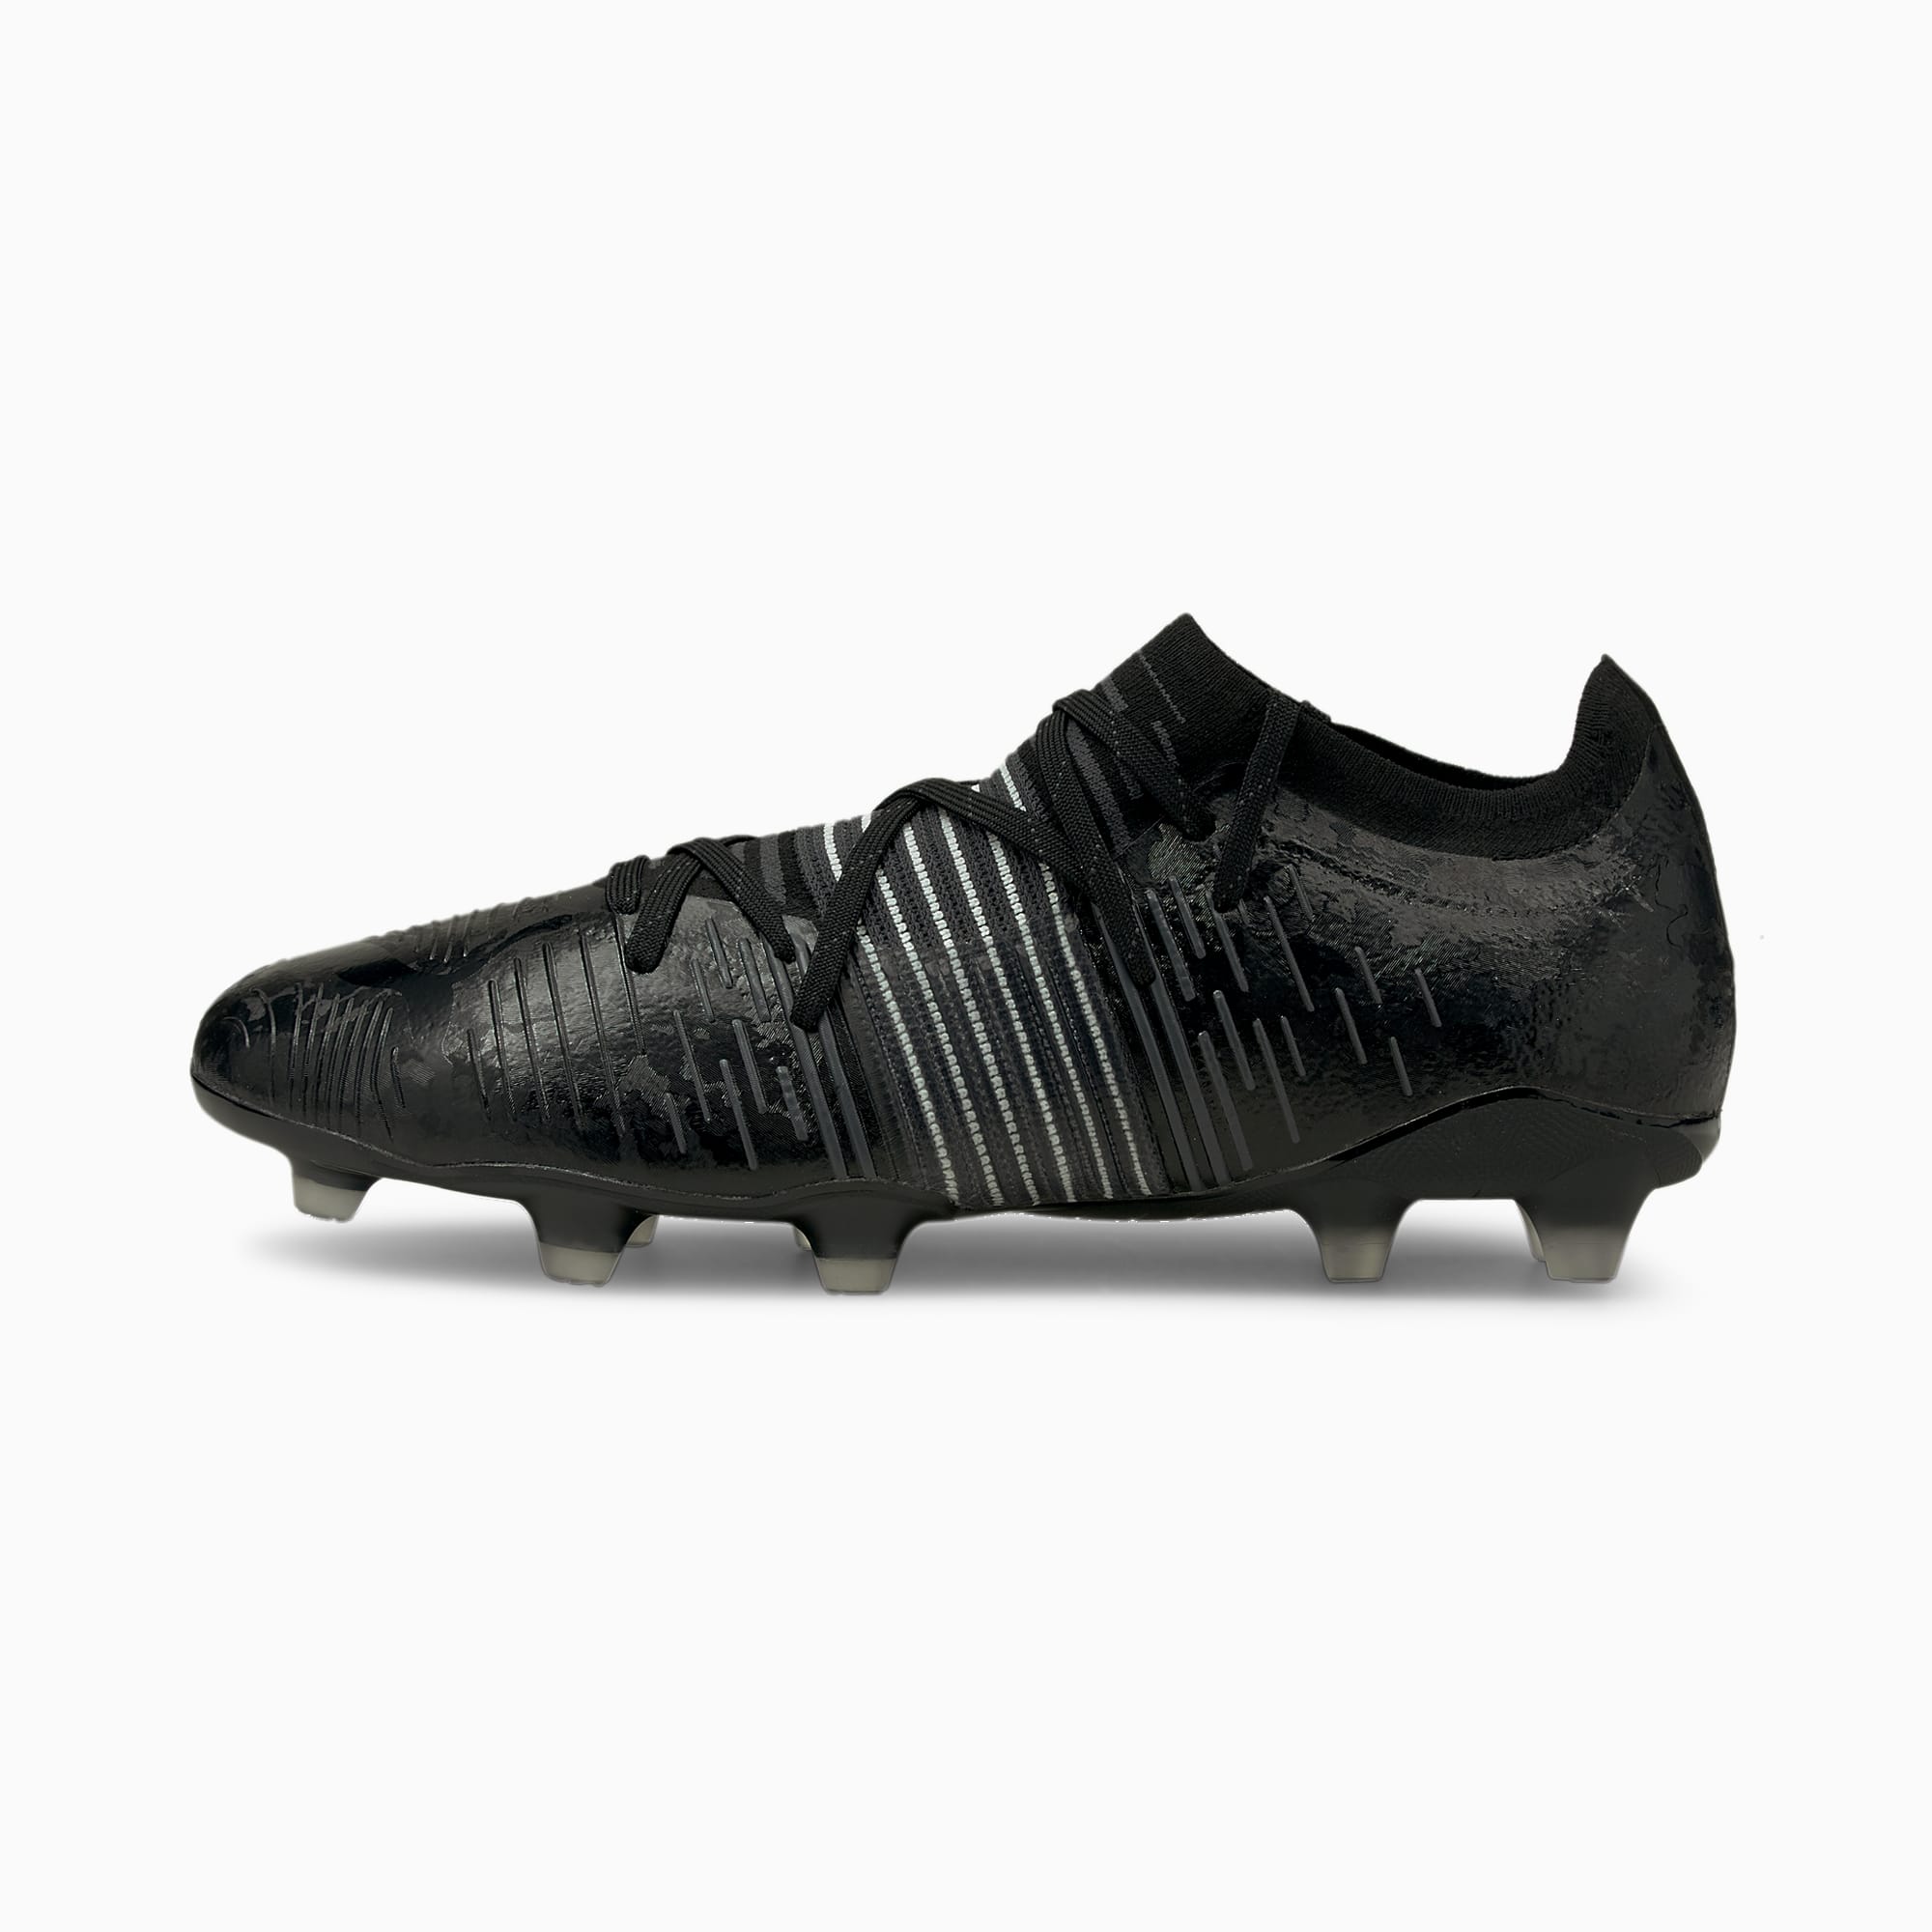 PUMA Chaussures de football FUTURE Z 2.1 FG/AG homme, Noir/Gris, Taille 40.5, Chaussures